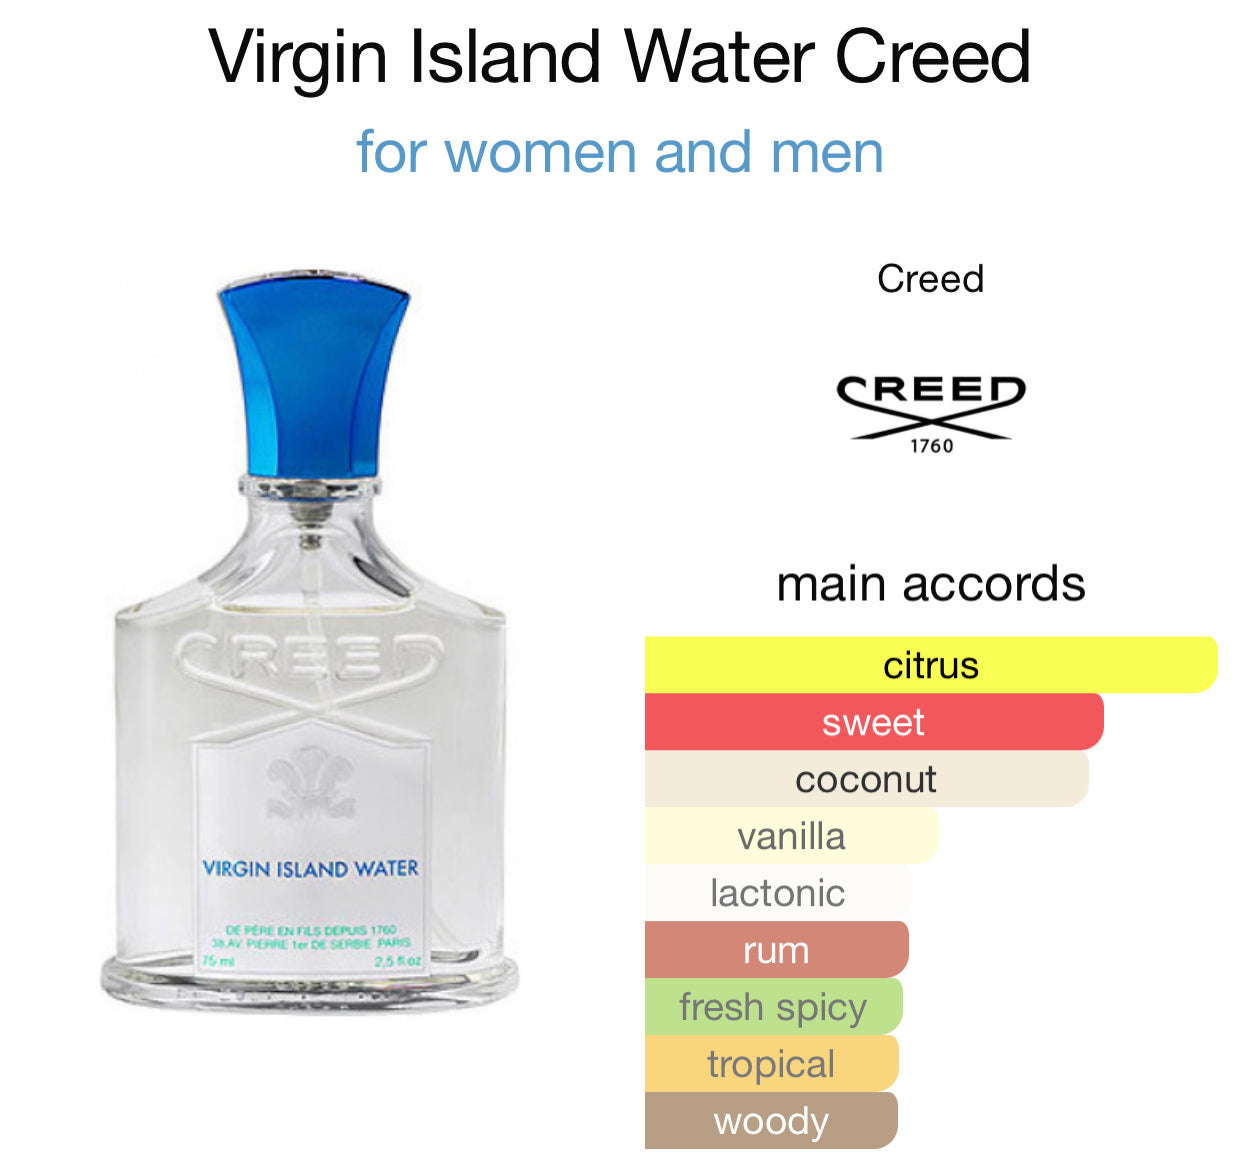 Inspired by Virgin Island Water Eau De Parfum from Creed